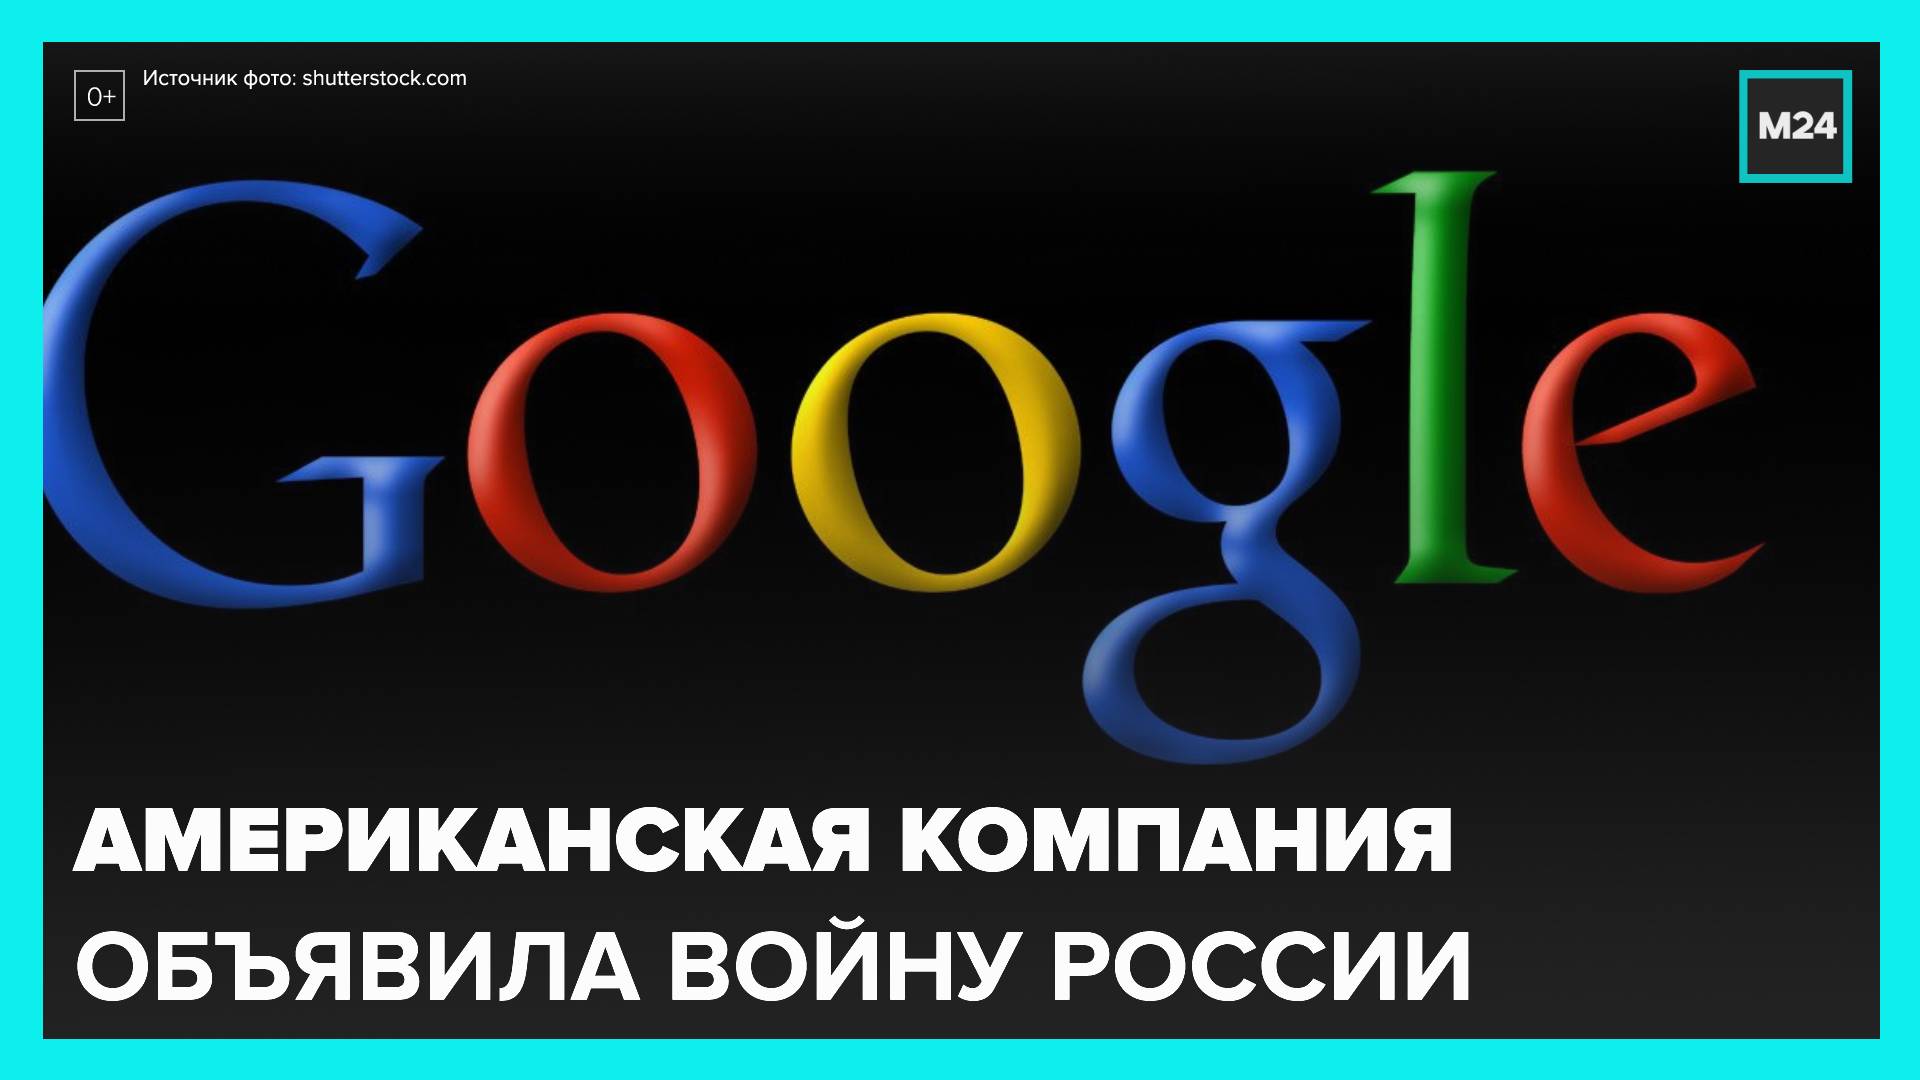 Google kak. Google Sky. Логотип гугл в небе. Гугл на белом фоне. Логотип Google на черном фоне.